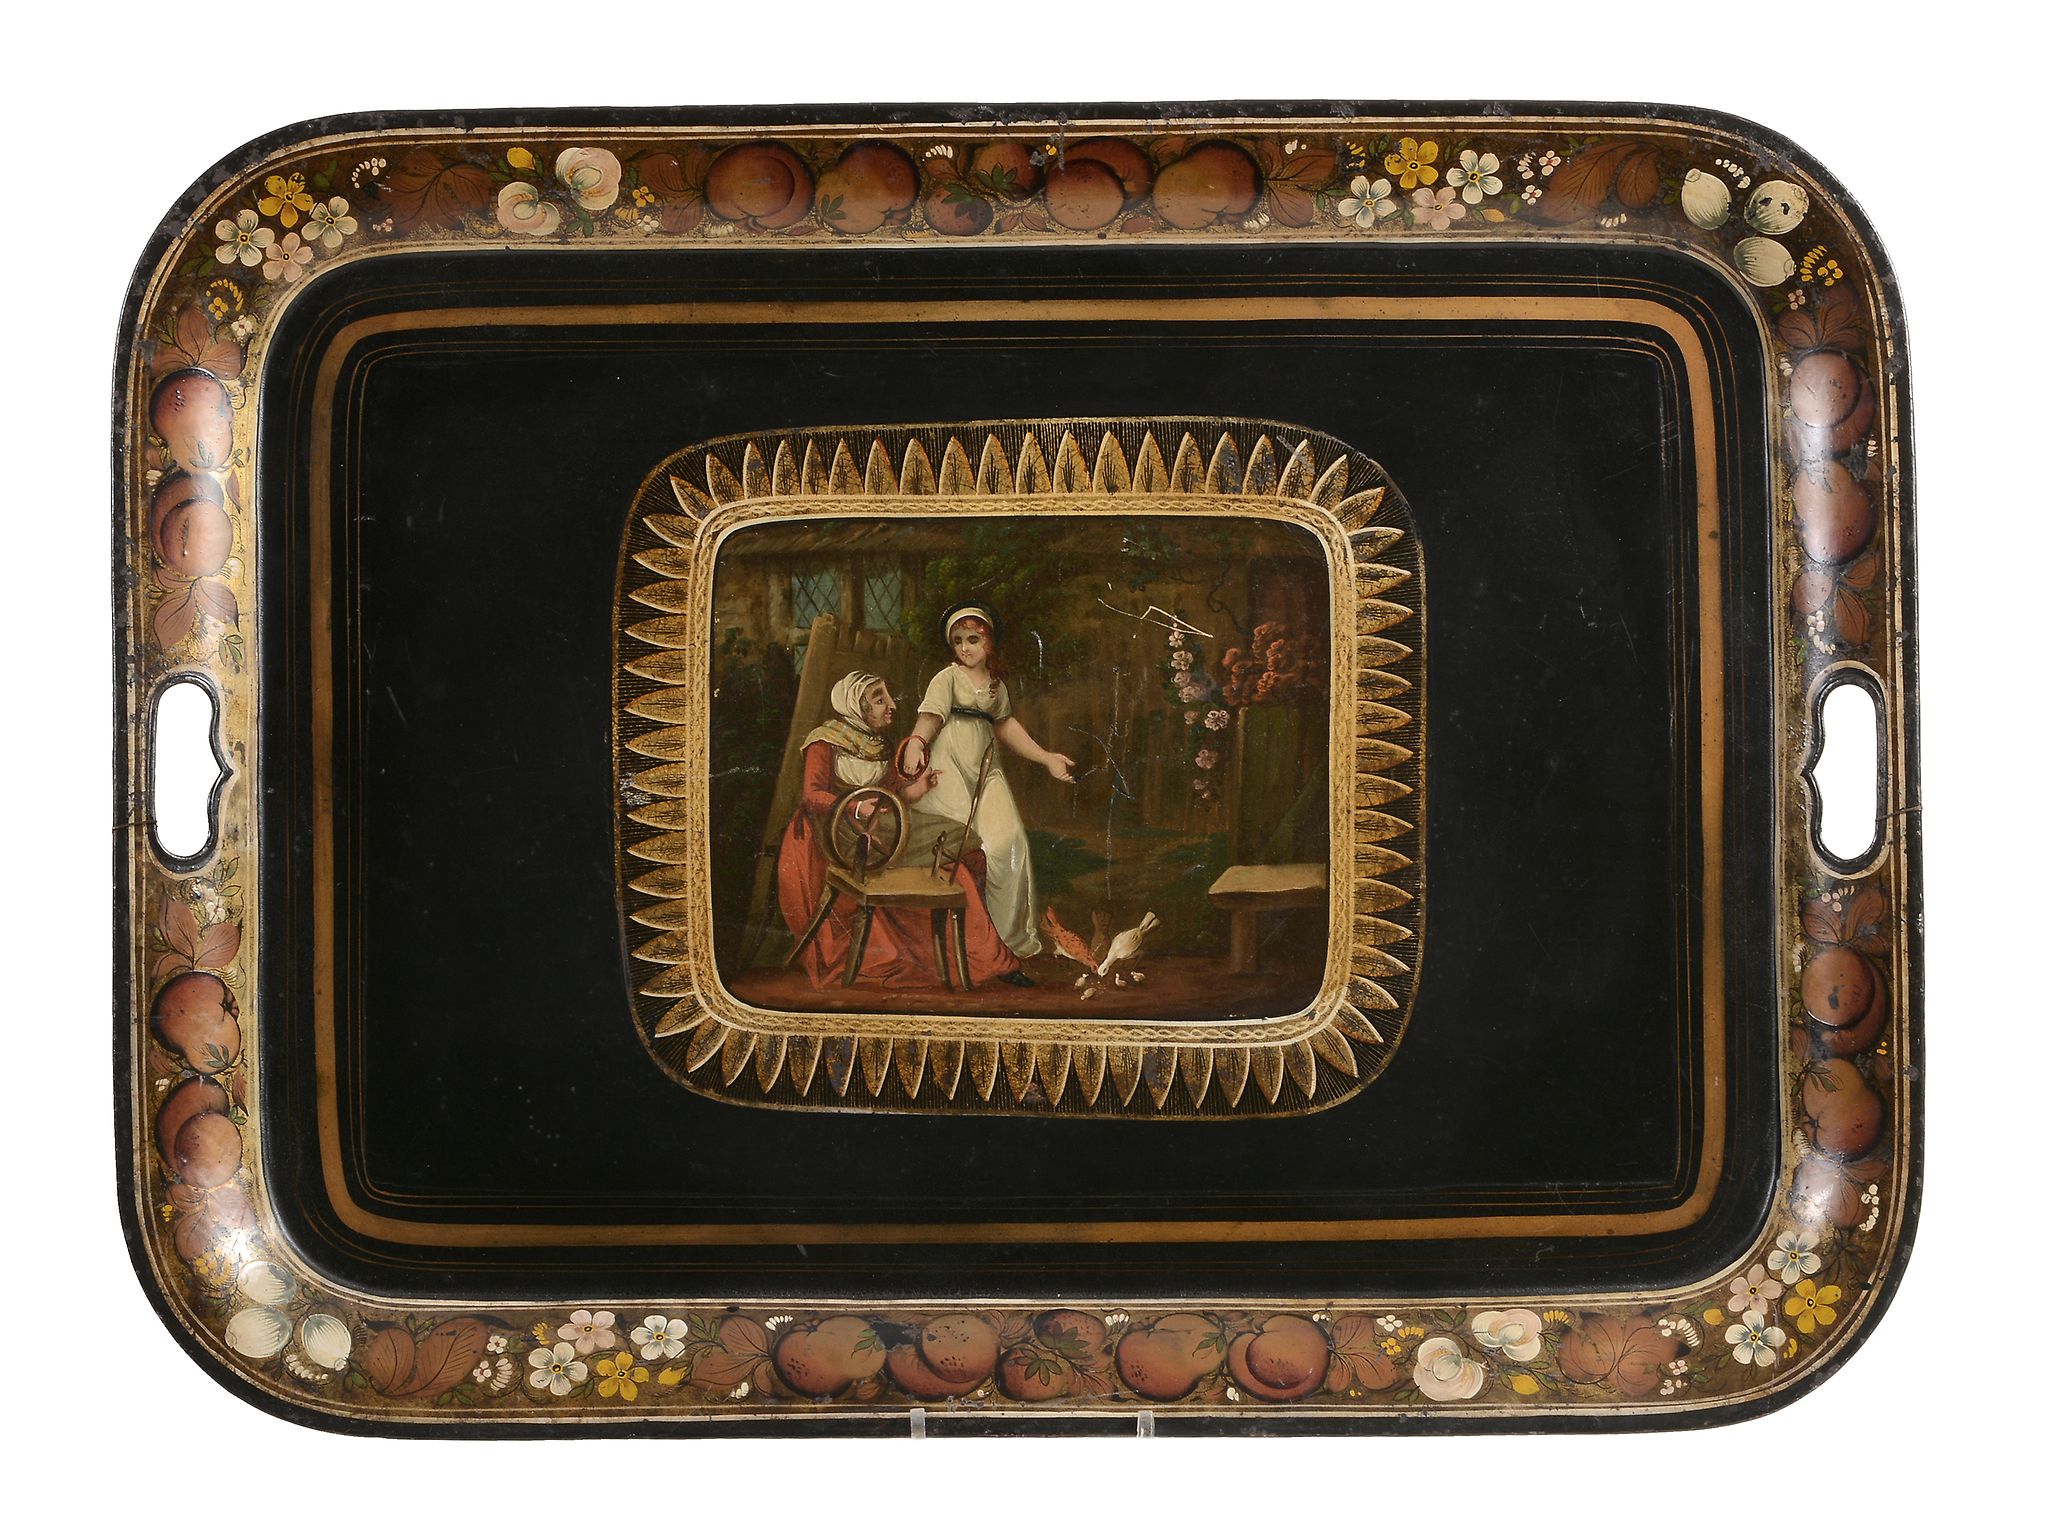 A George III tole peinte tray, circa 1800  A George III tole peinte tray,   circa 1800, painted with